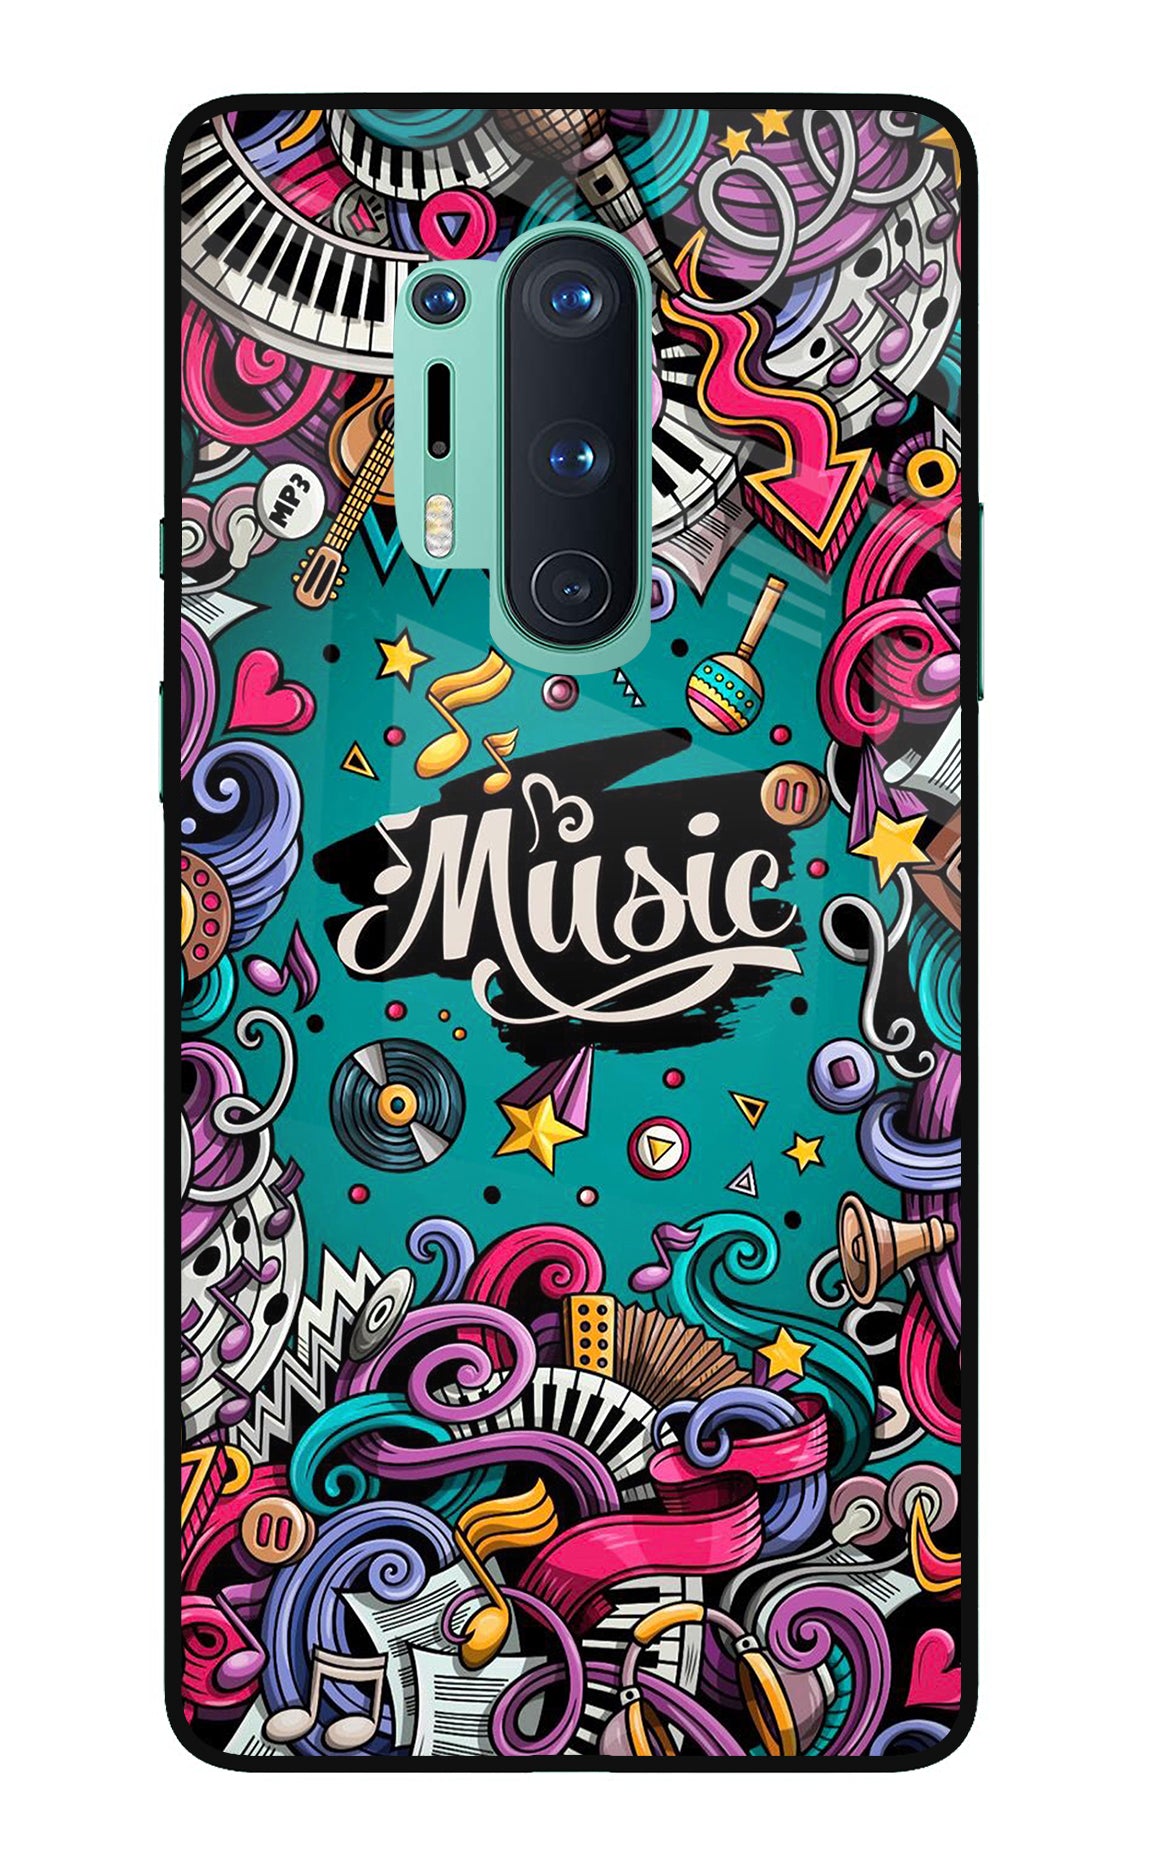 Music Graffiti Oneplus 8 Pro Back Cover